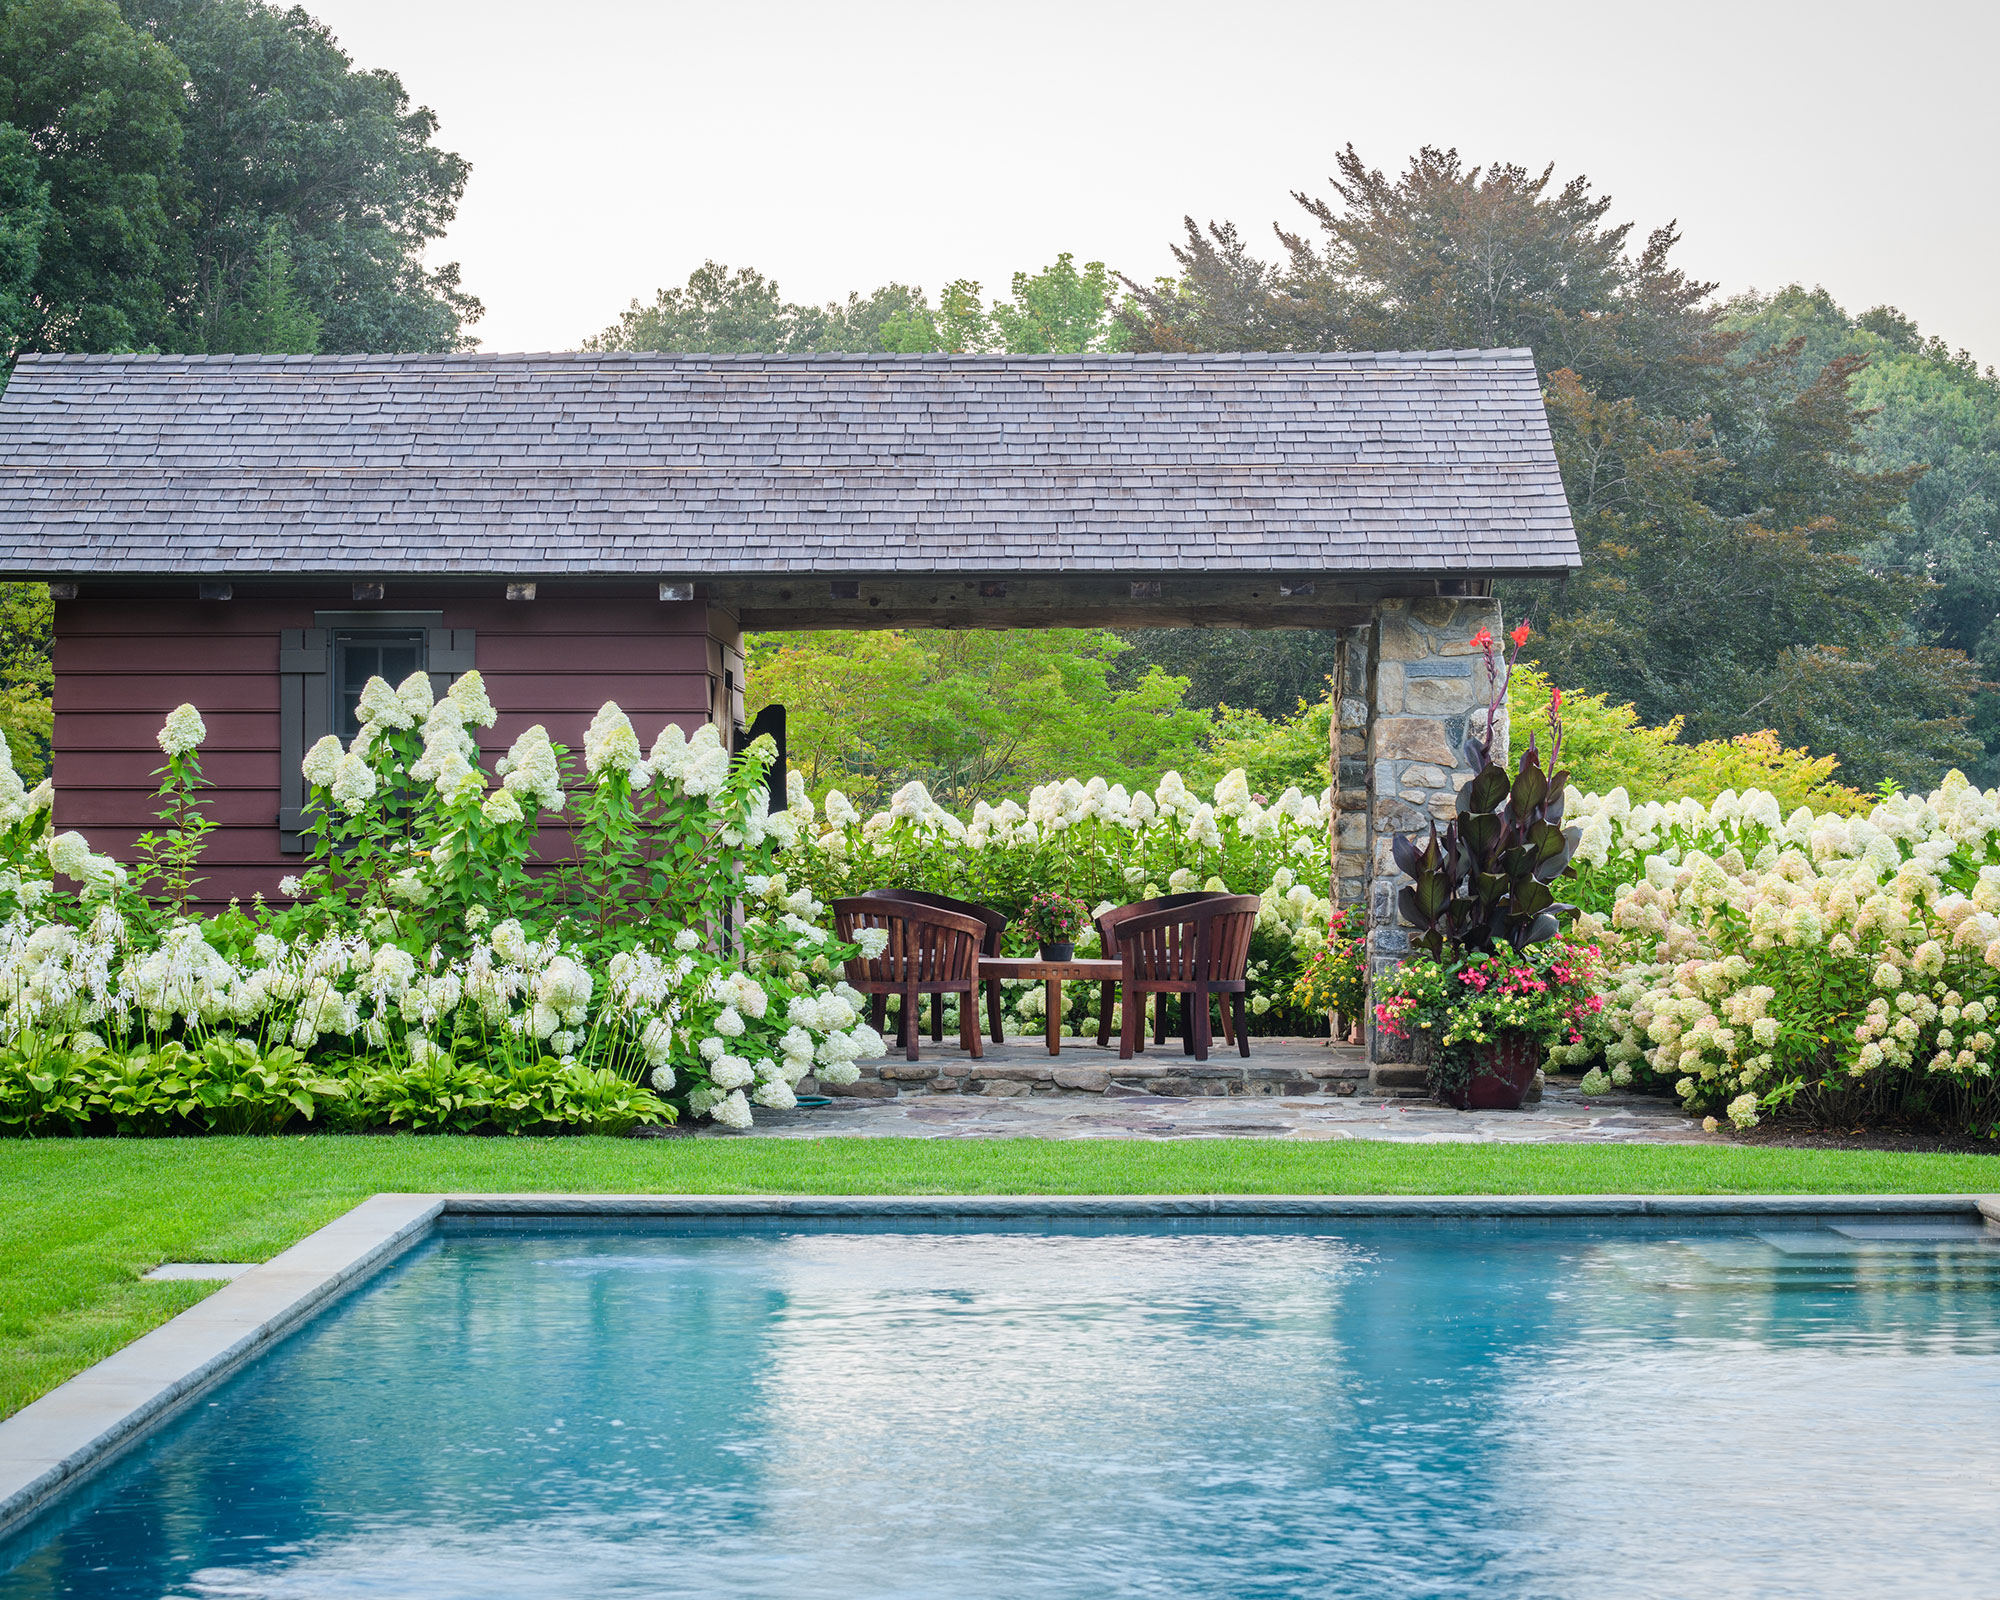 Pool Ideas: 20 Stylish Ways To Enjoy Swimming In The Yard | Homes & Gardens  |